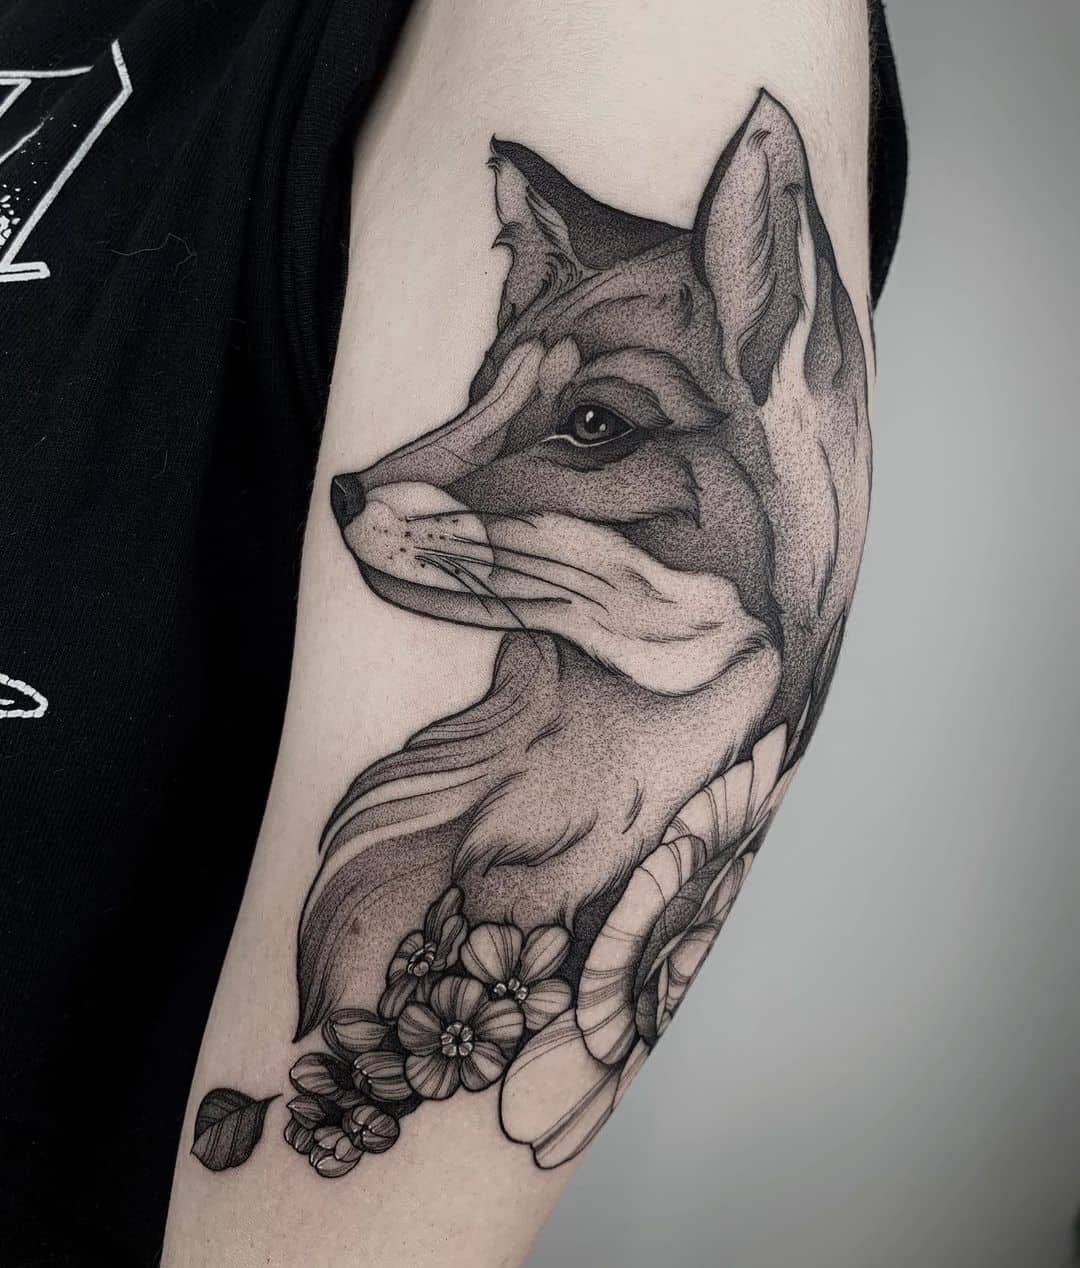 Amazing black and white simple fox tattoo by franzi kranz tattoo